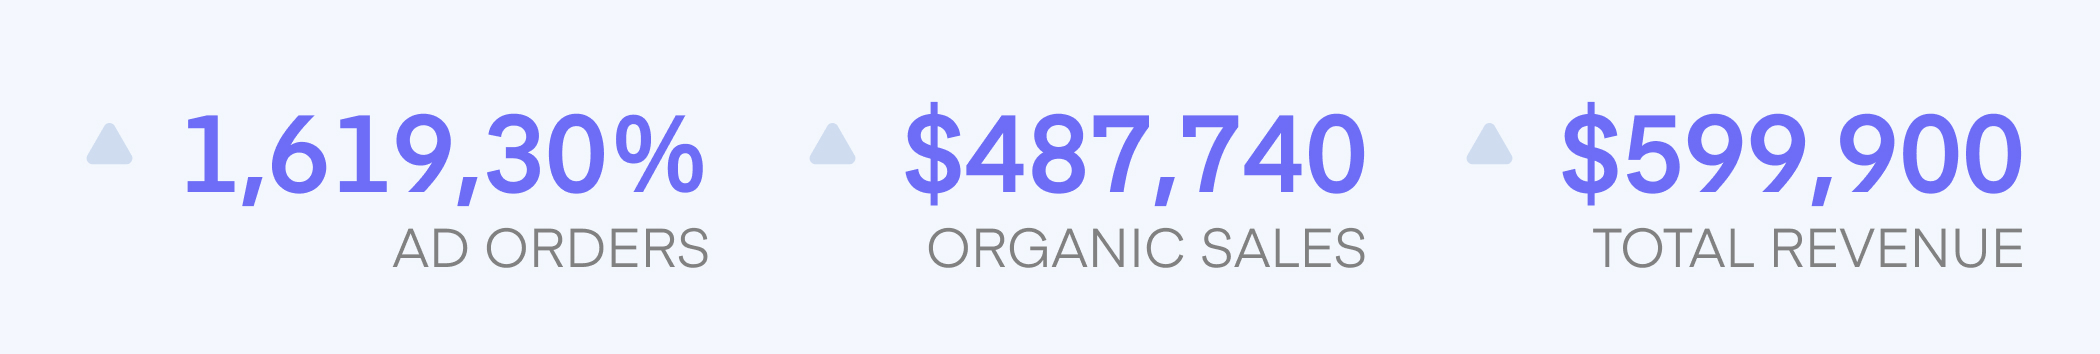 Ad Orders vs Organic Sales vs Total Revenue